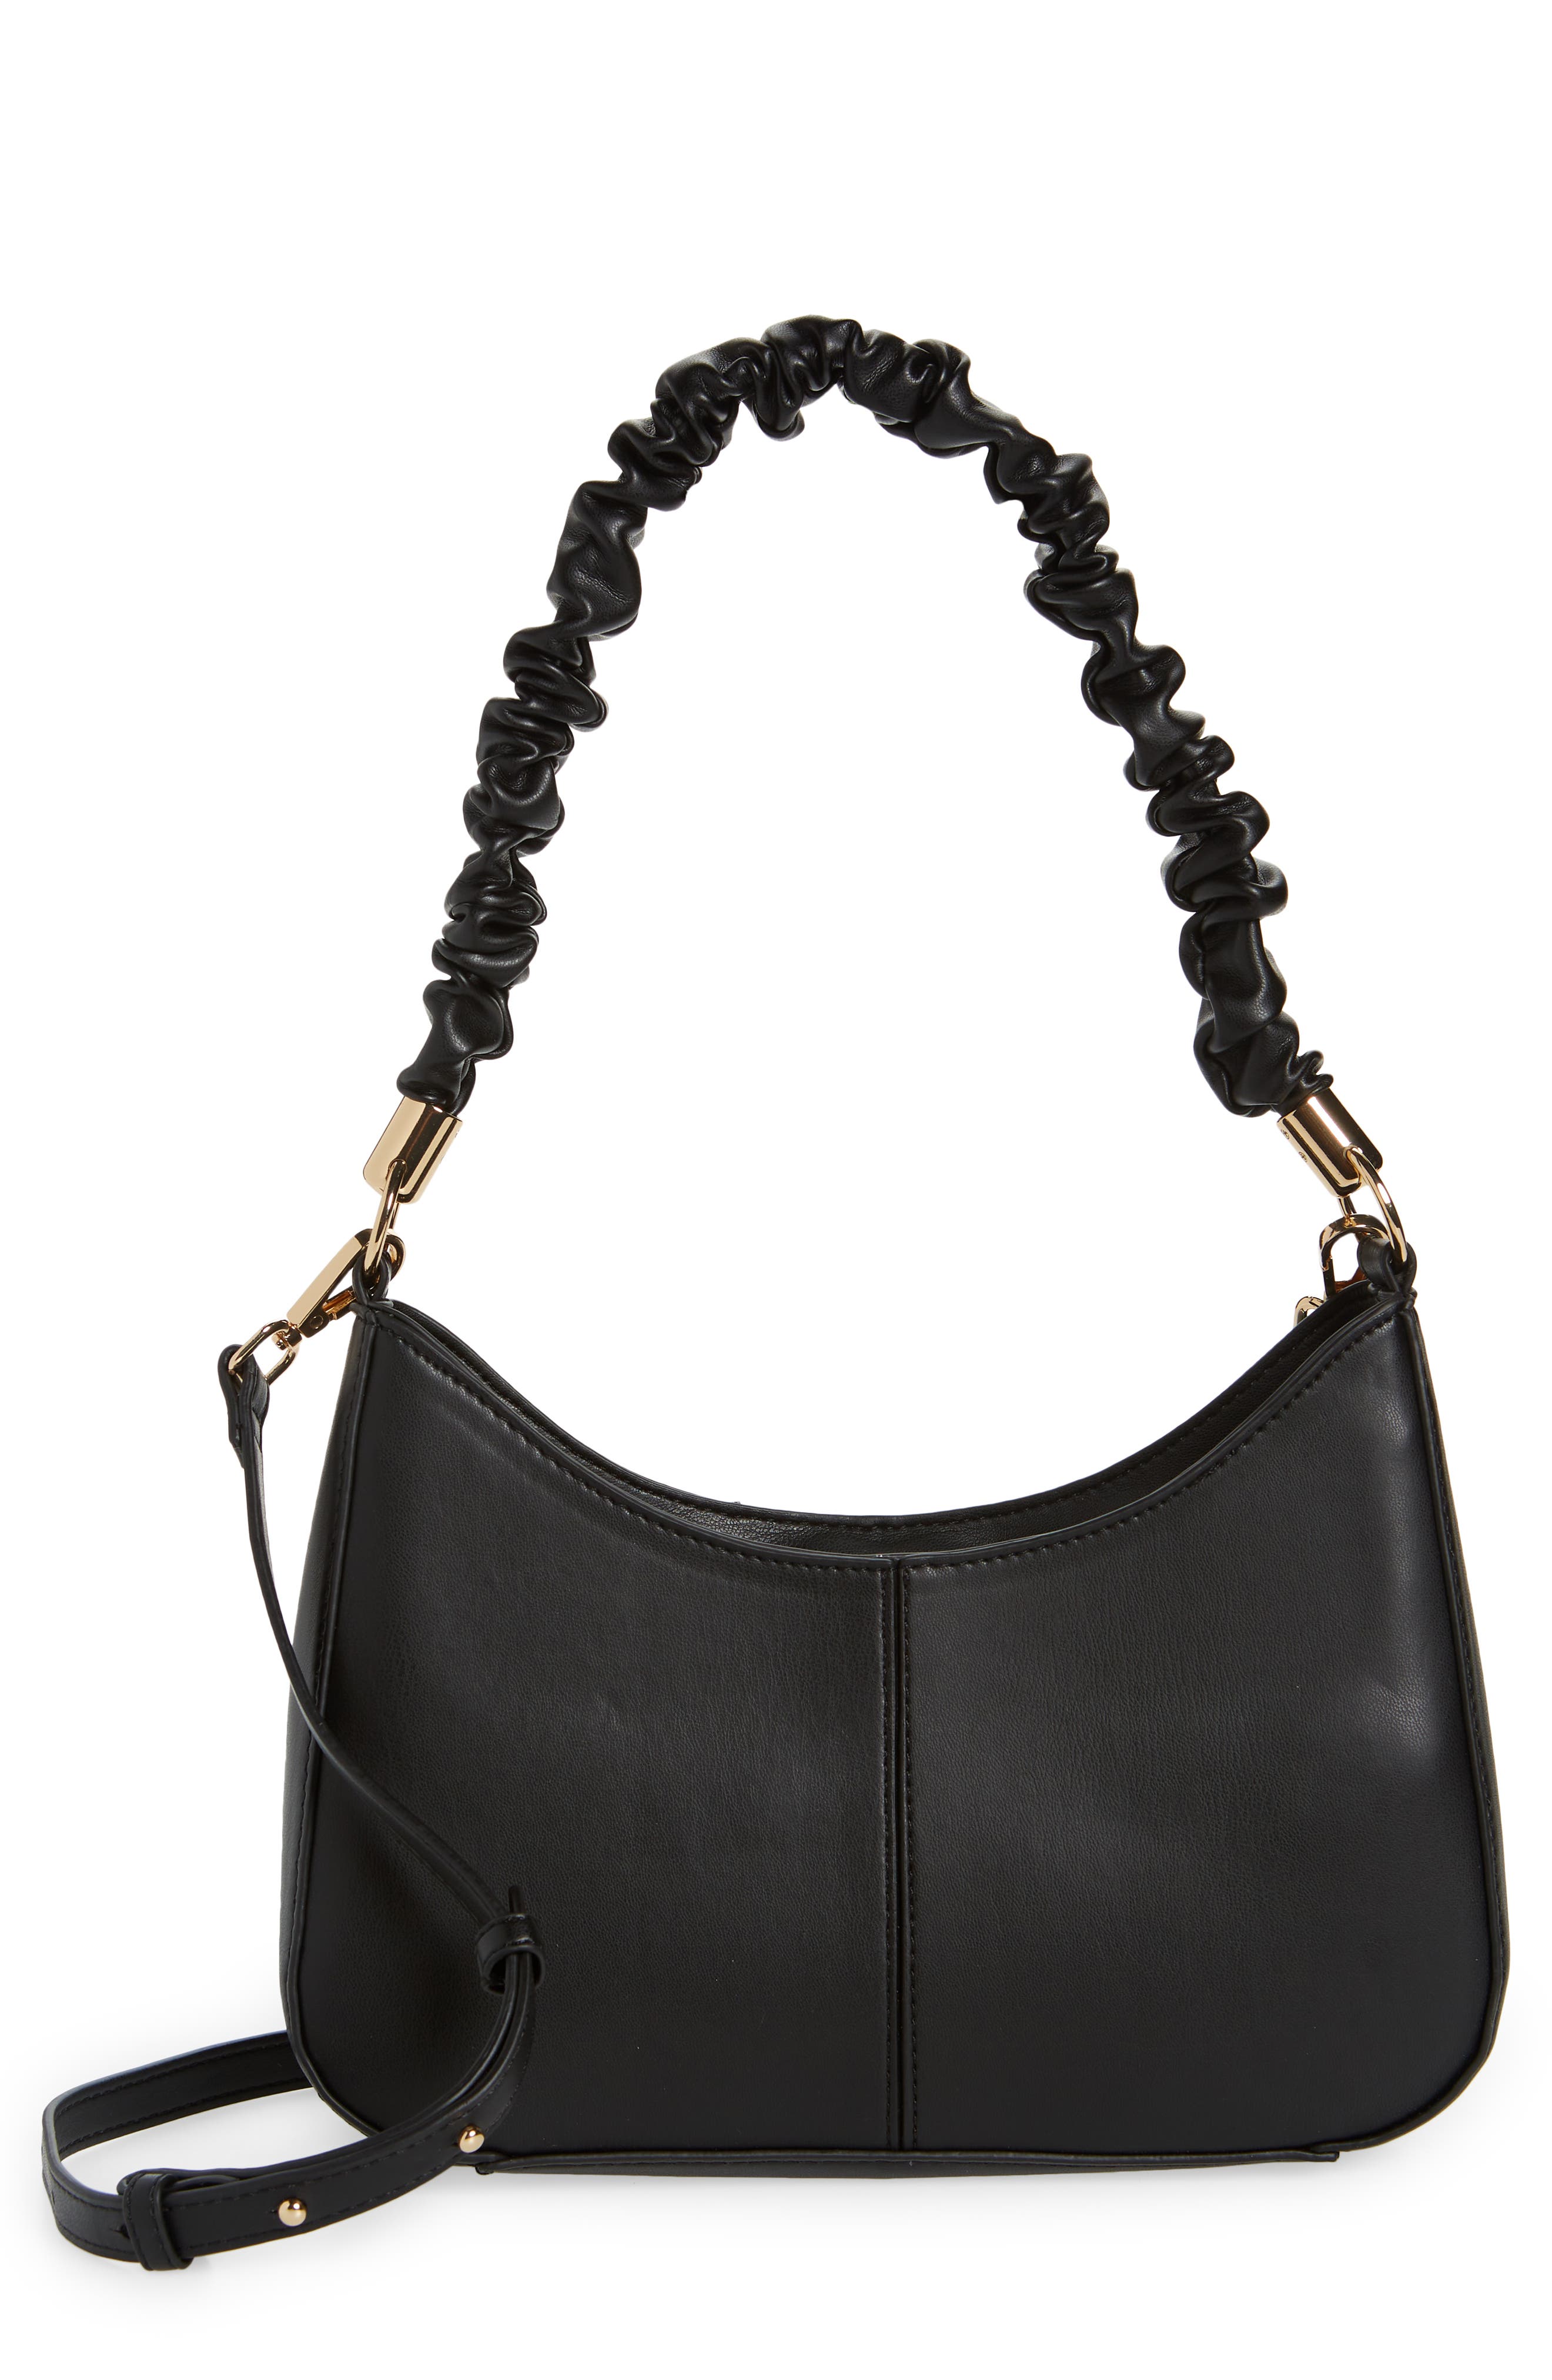 Handbag Faux-leather cross-body bag shoulder bag Black Faux Leather Bag LAAK.